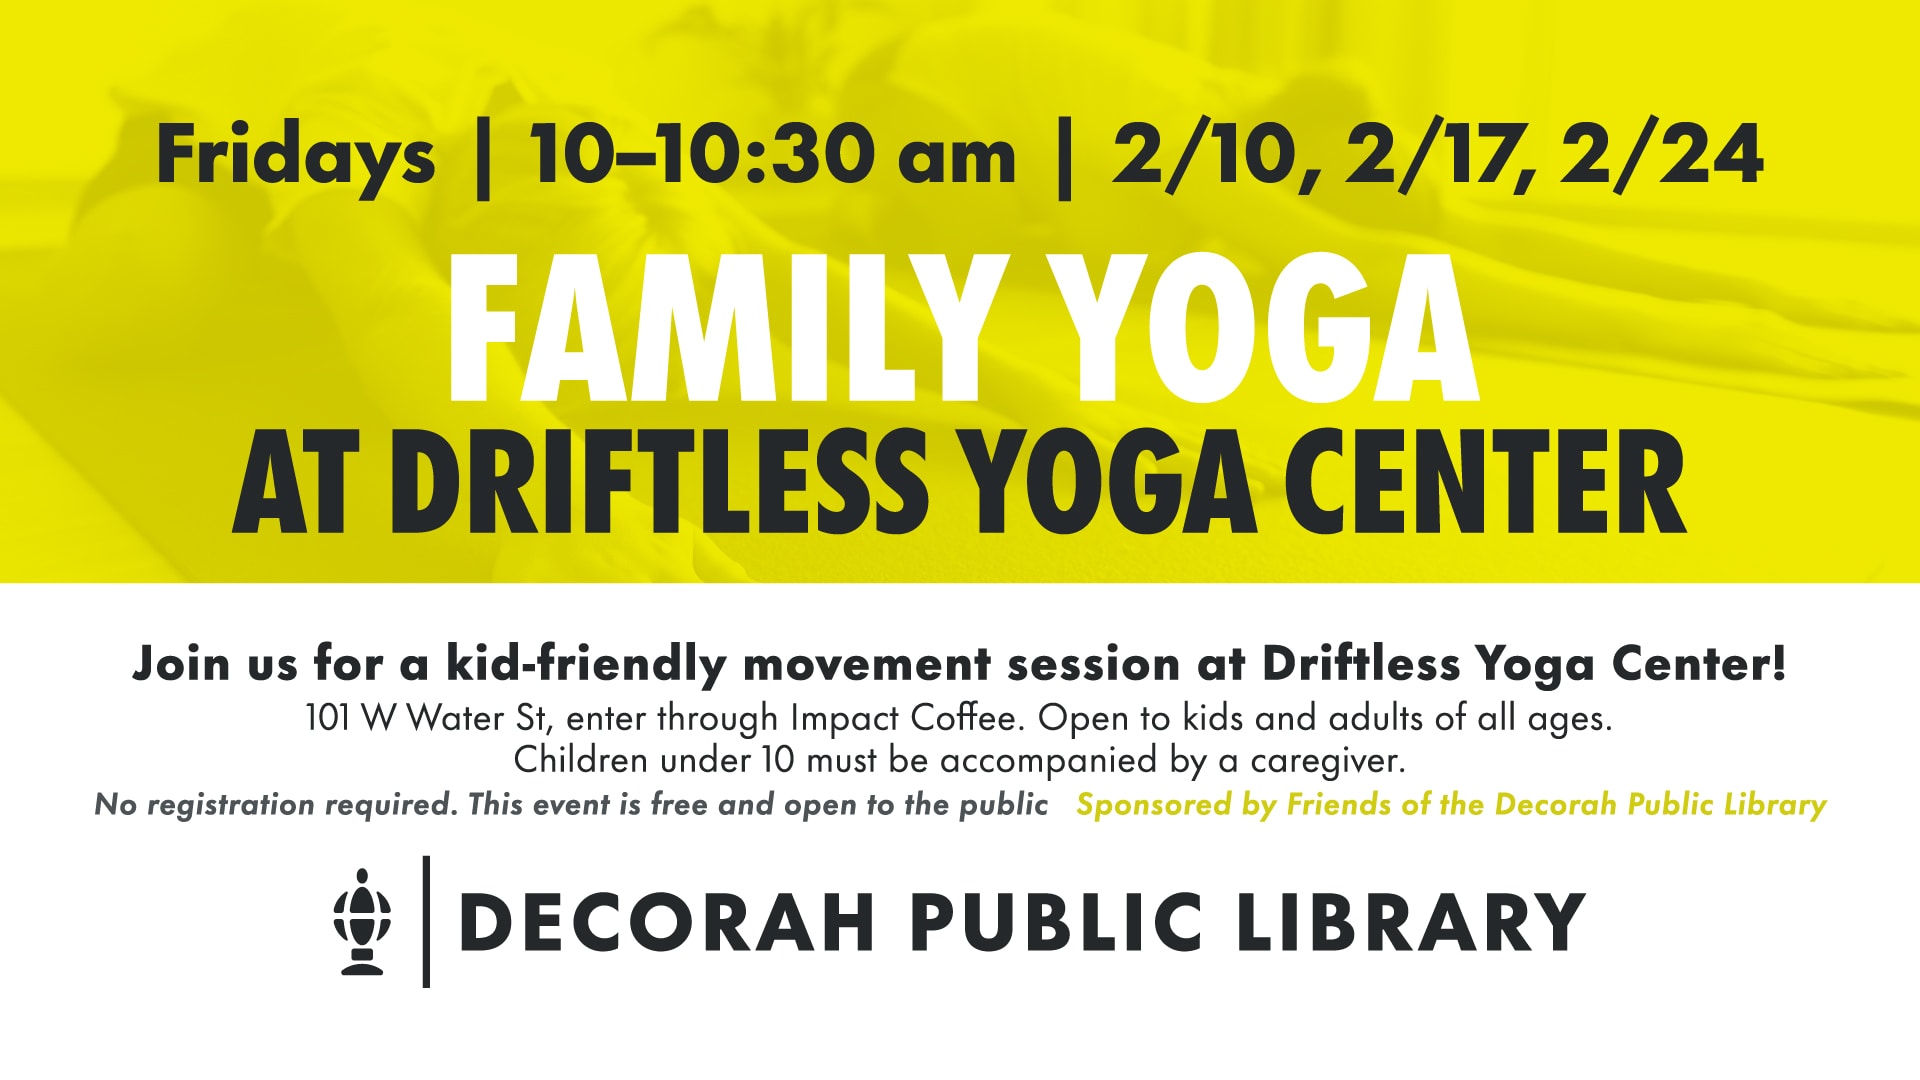 Family Yoga at Driftless Yoga Center thumbnail